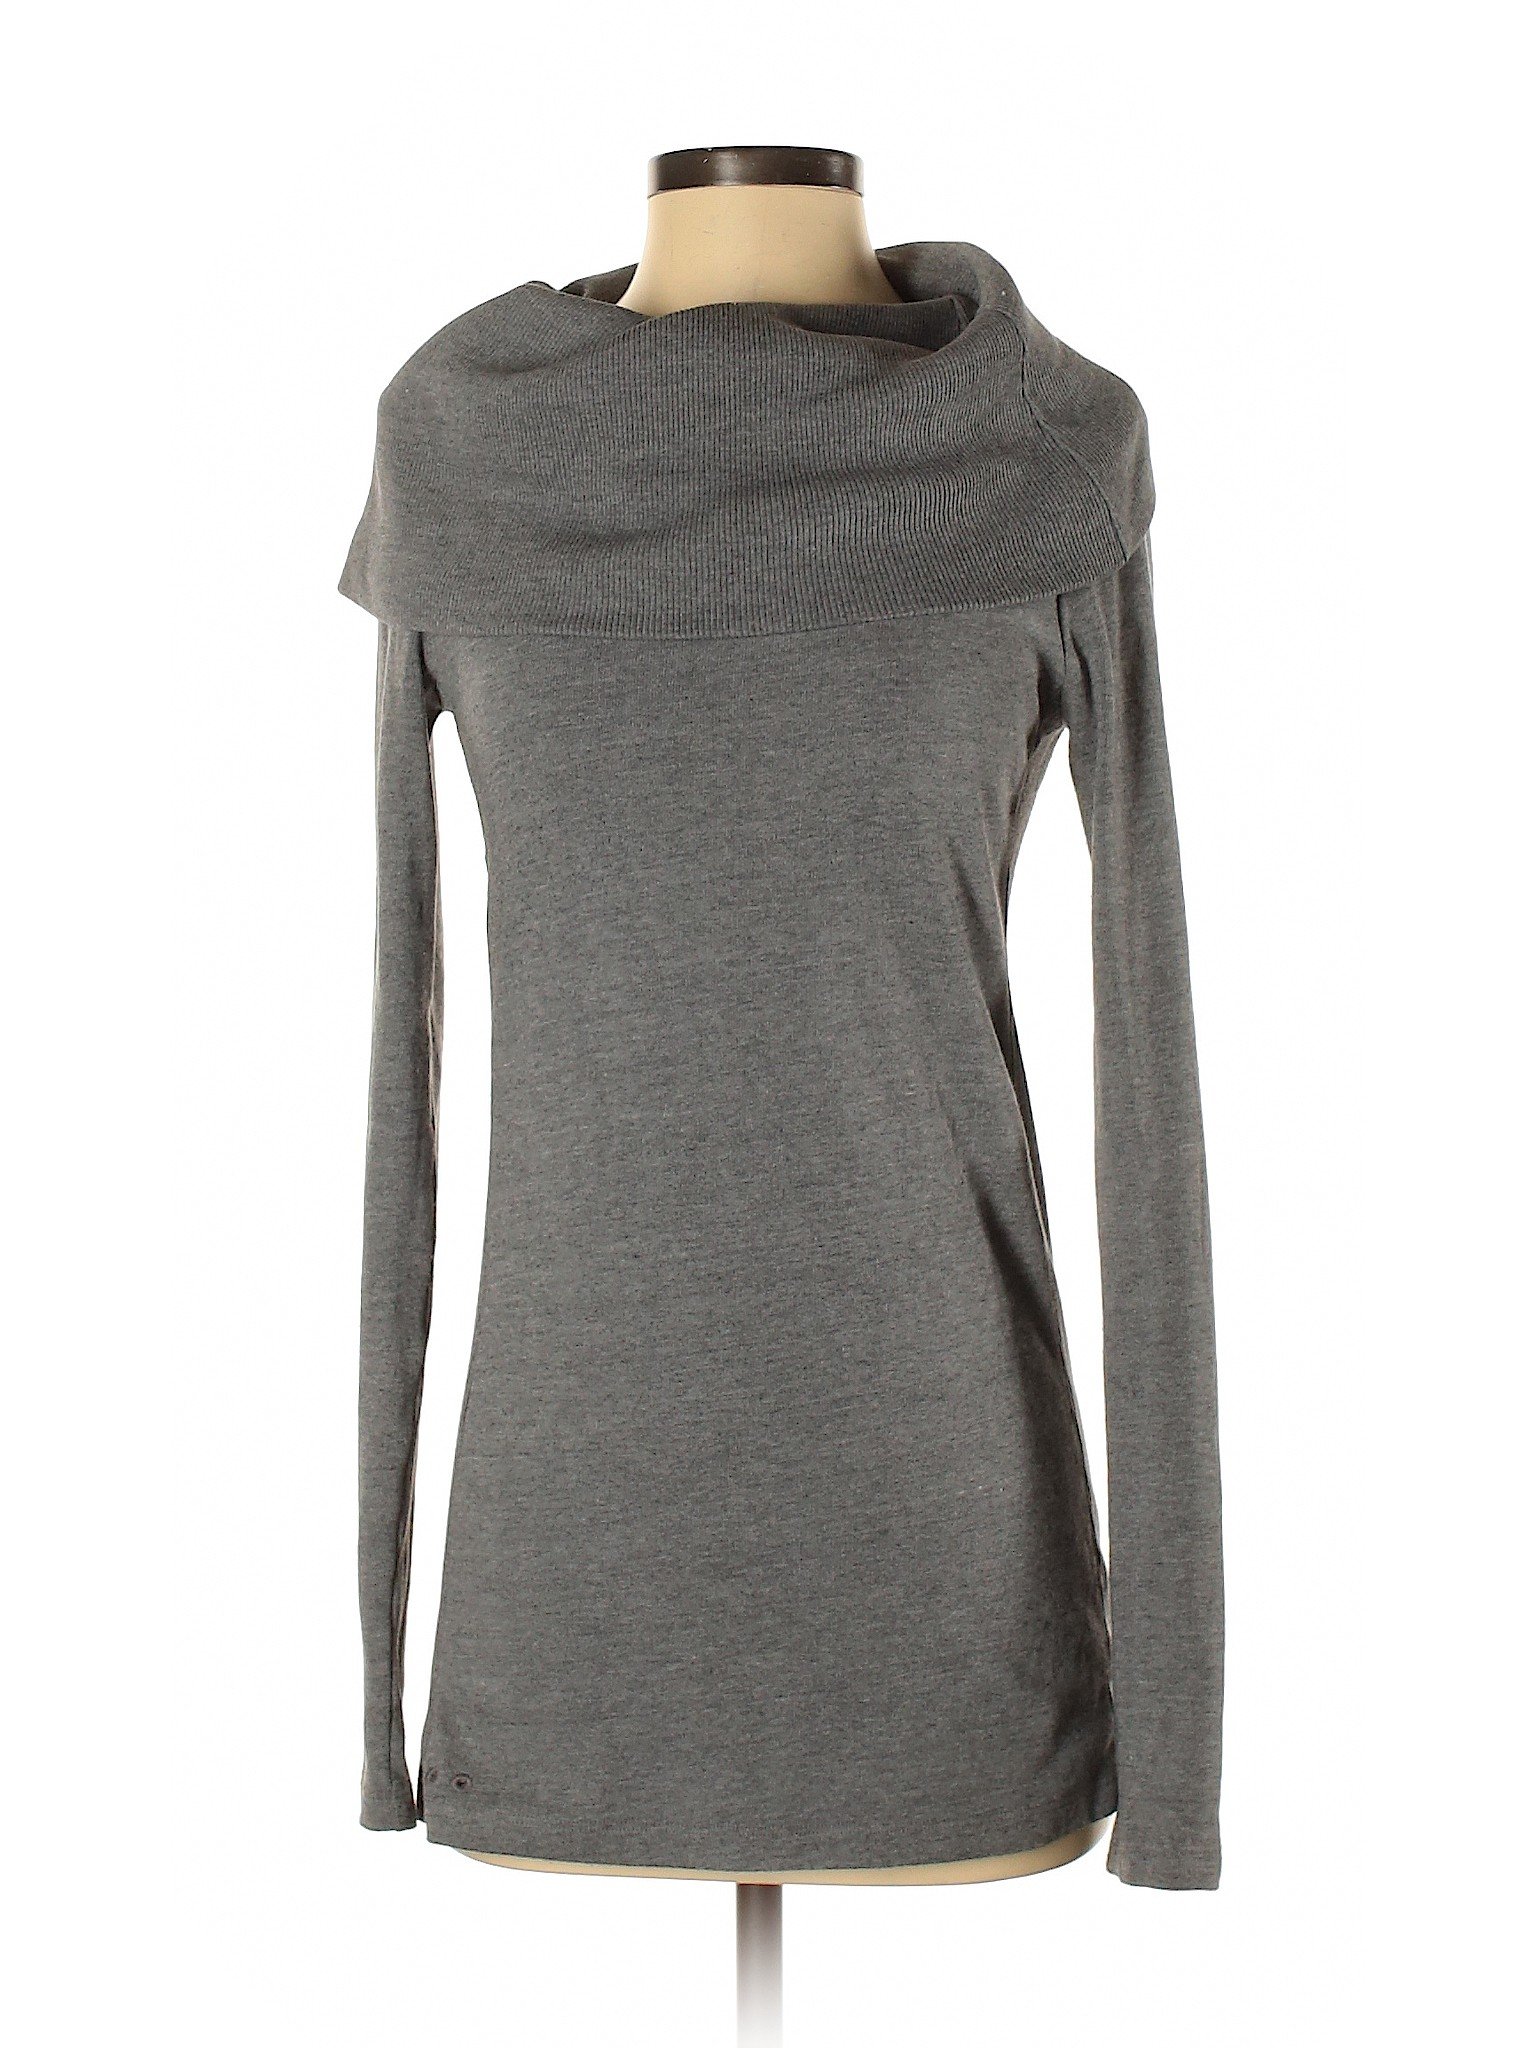 Converse One Star Women Gray Pullover Sweater S | eBay